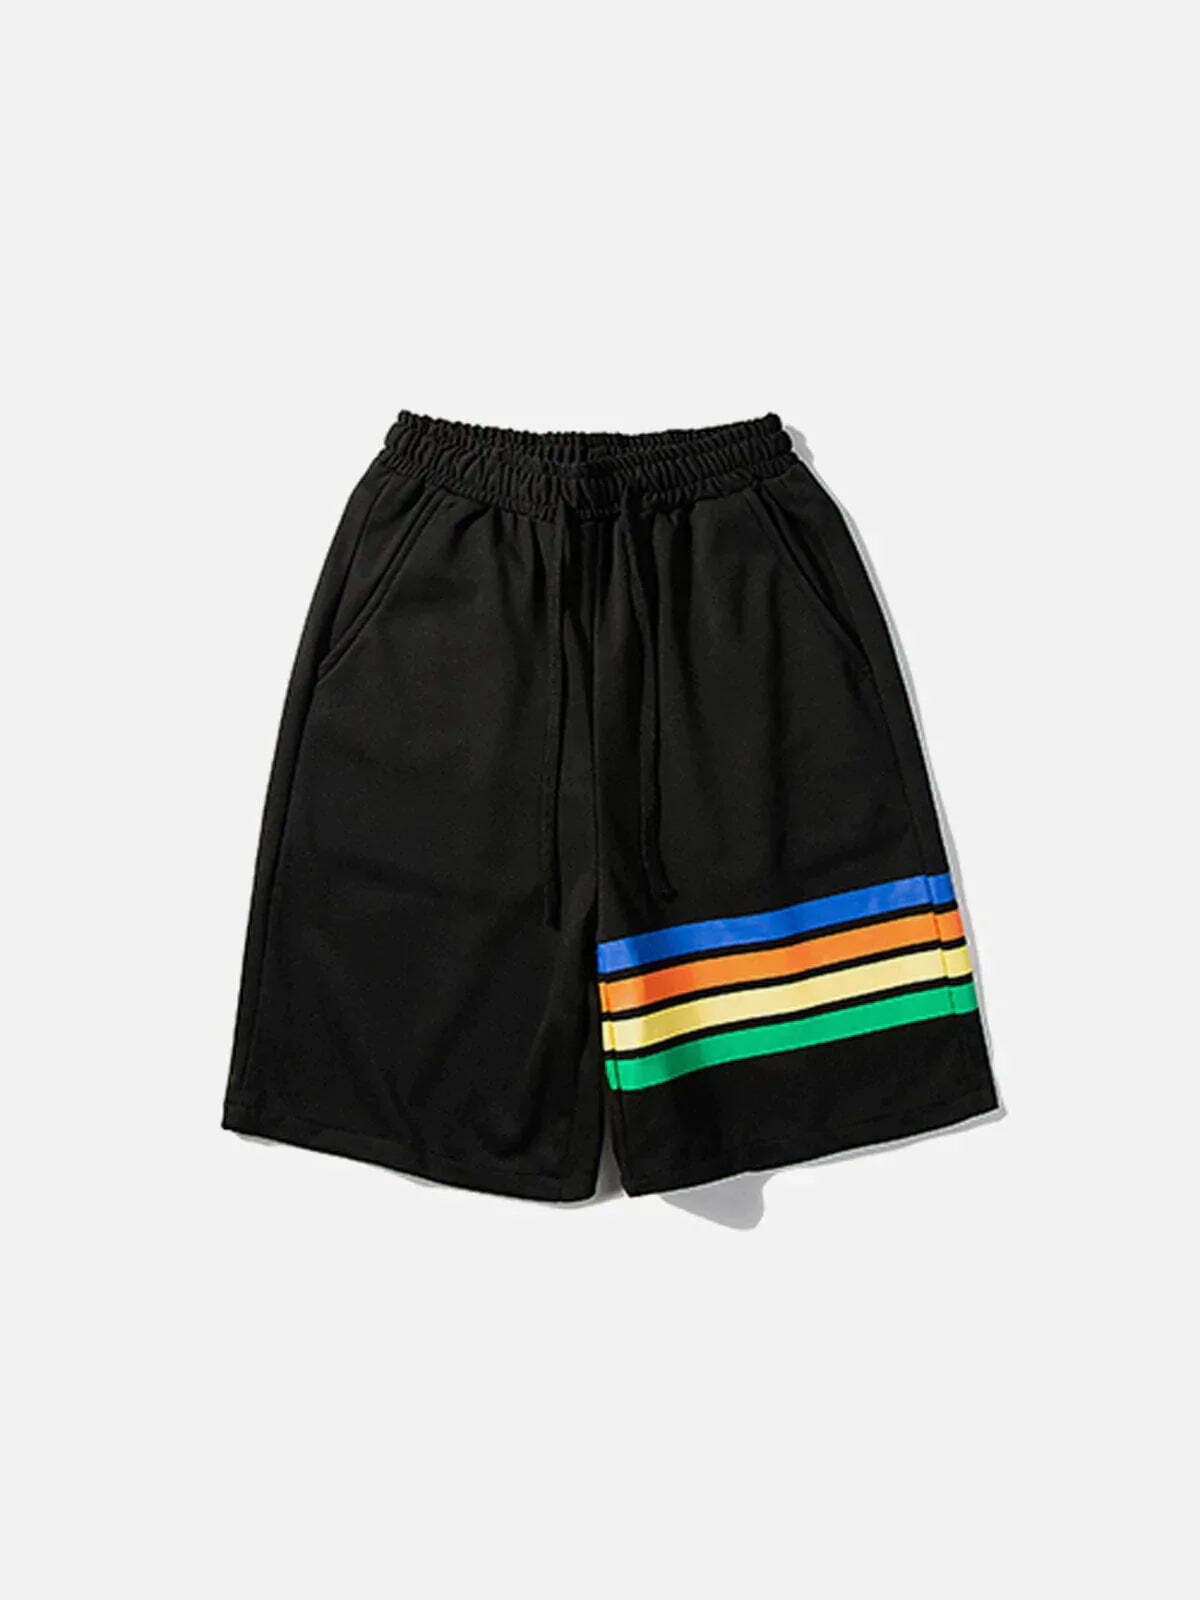 sleek striped drawstring shorts urban chic essential 3461